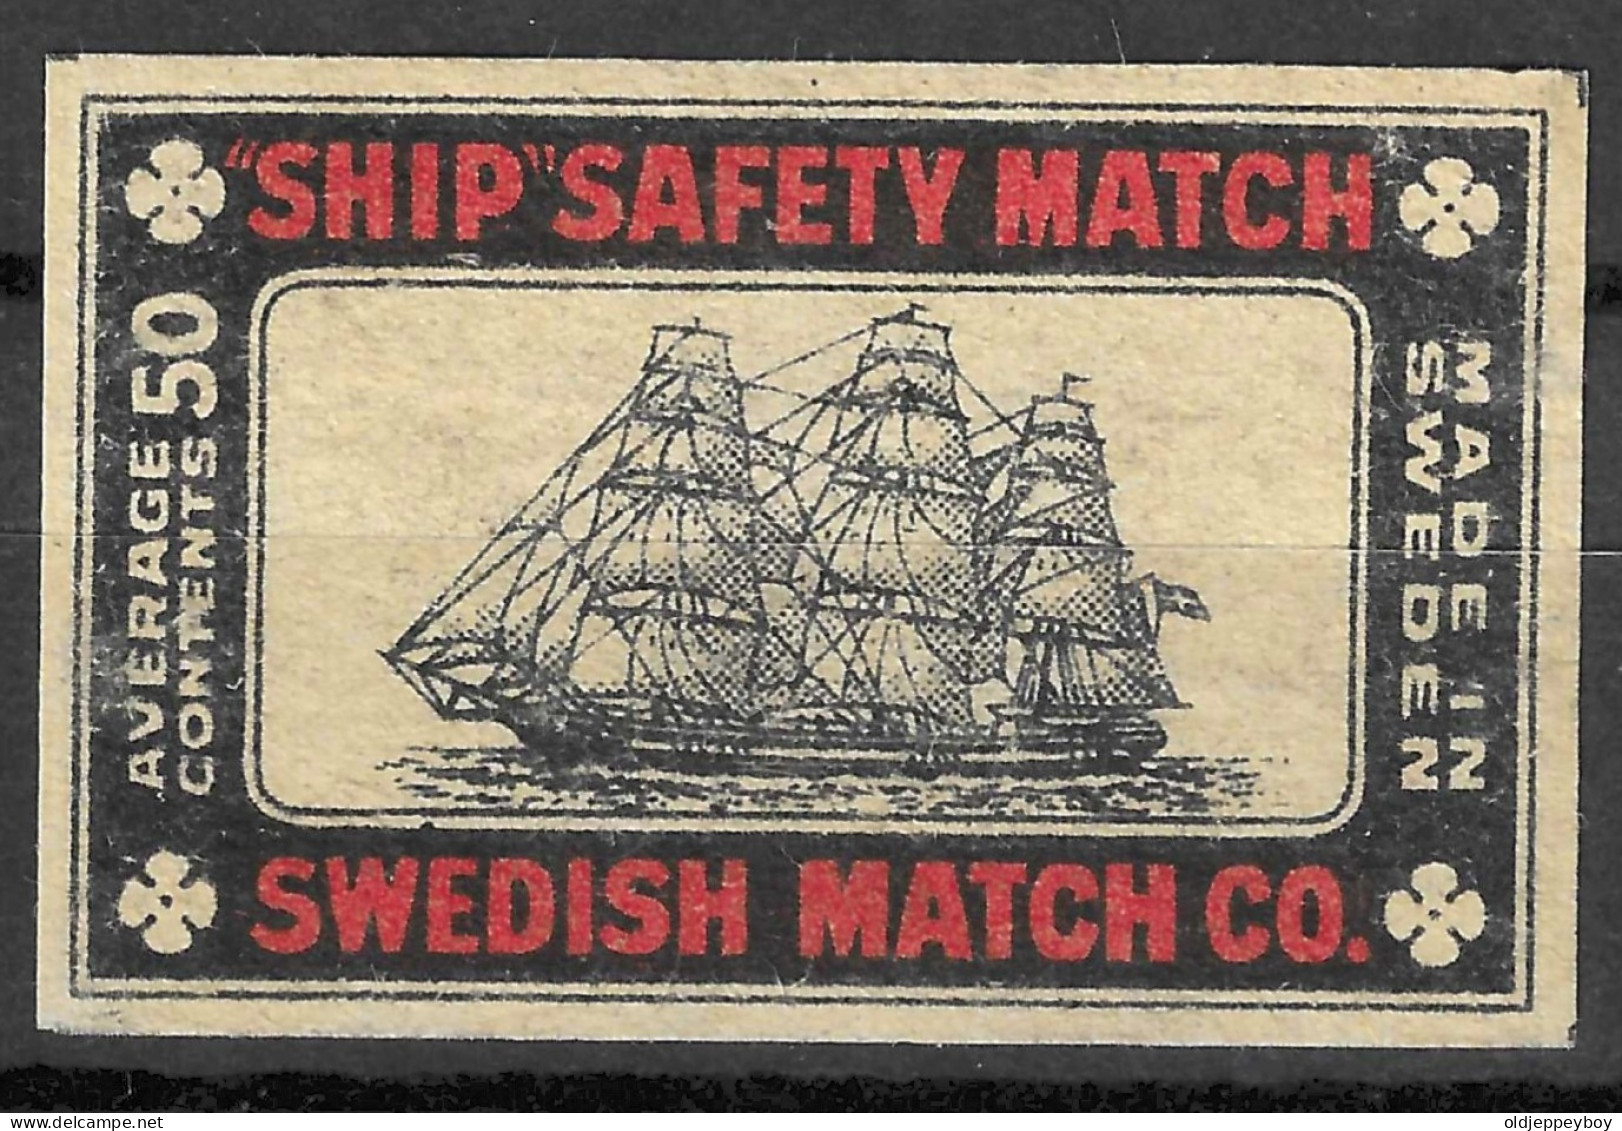 MADE IN SWEDEN VINTAGE Phillumeny MATCHBOX LABEL "SHIP" SWEDISH MATCH CO.   5.5  X 3.5 CM  RARE - Matchbox Labels